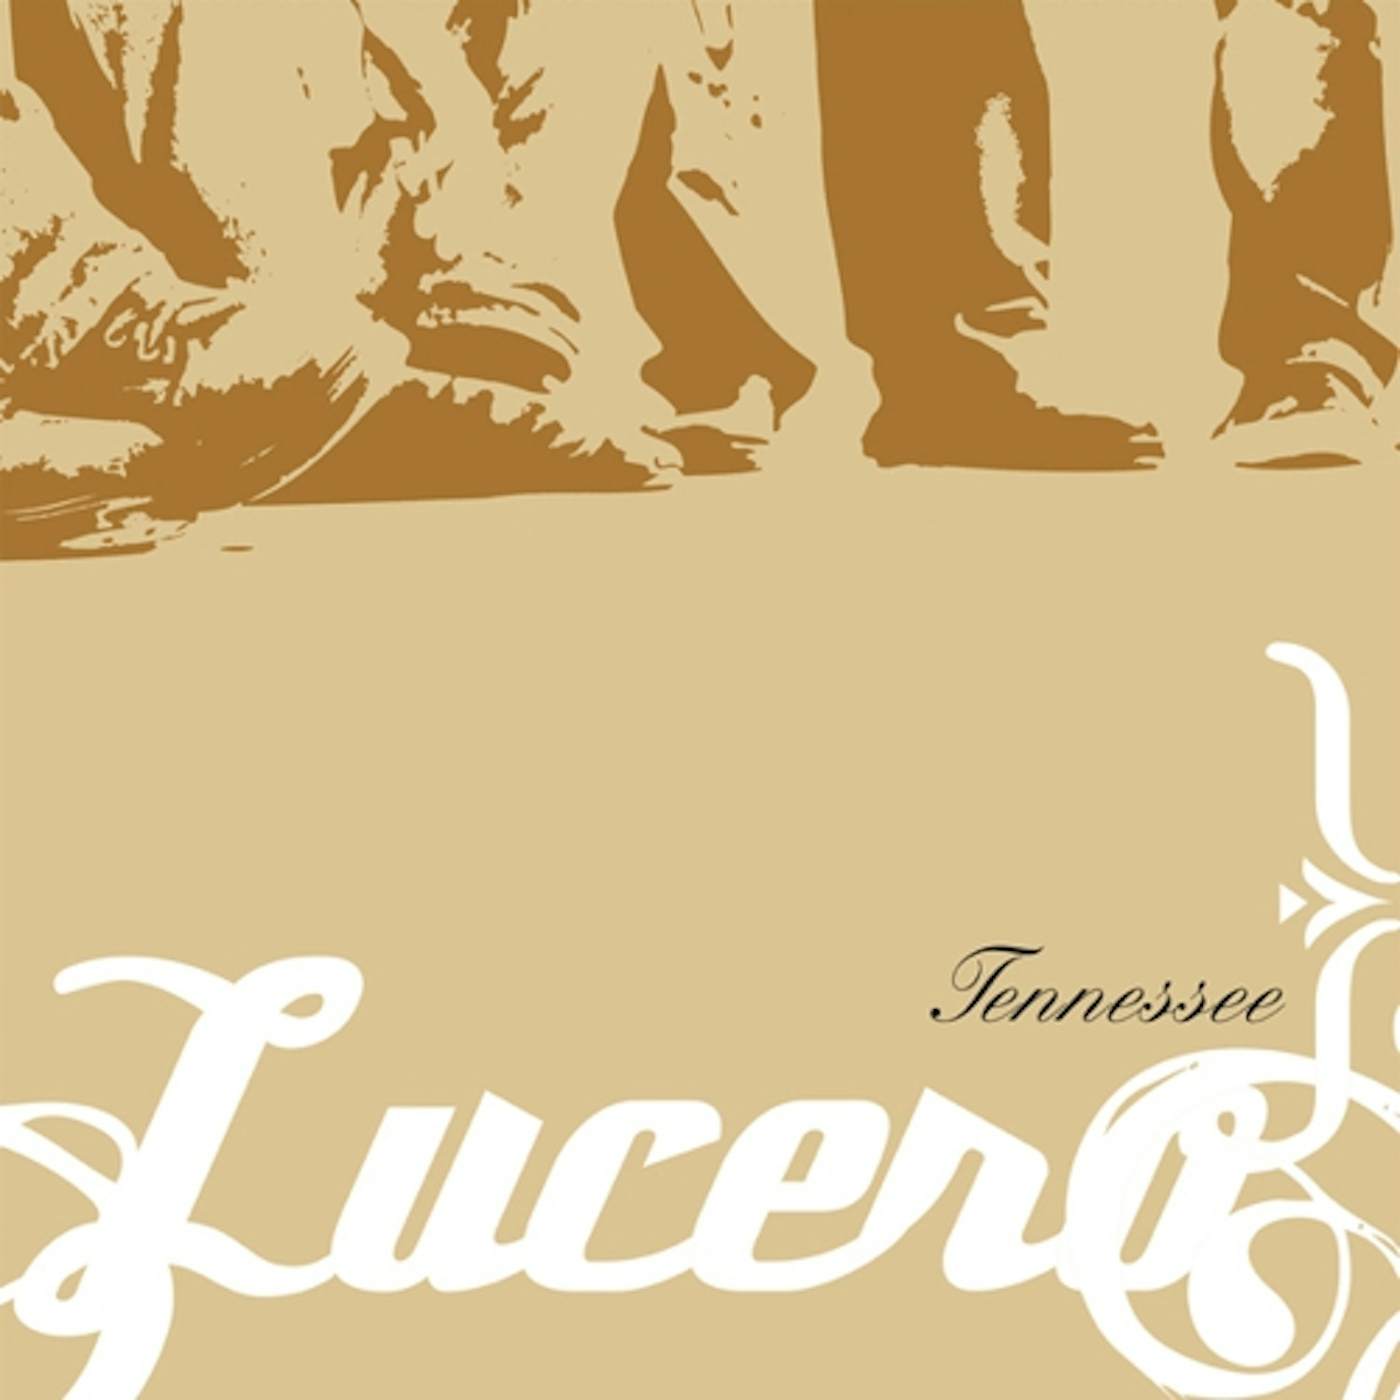 Lucero Tennessee Vinyl Record